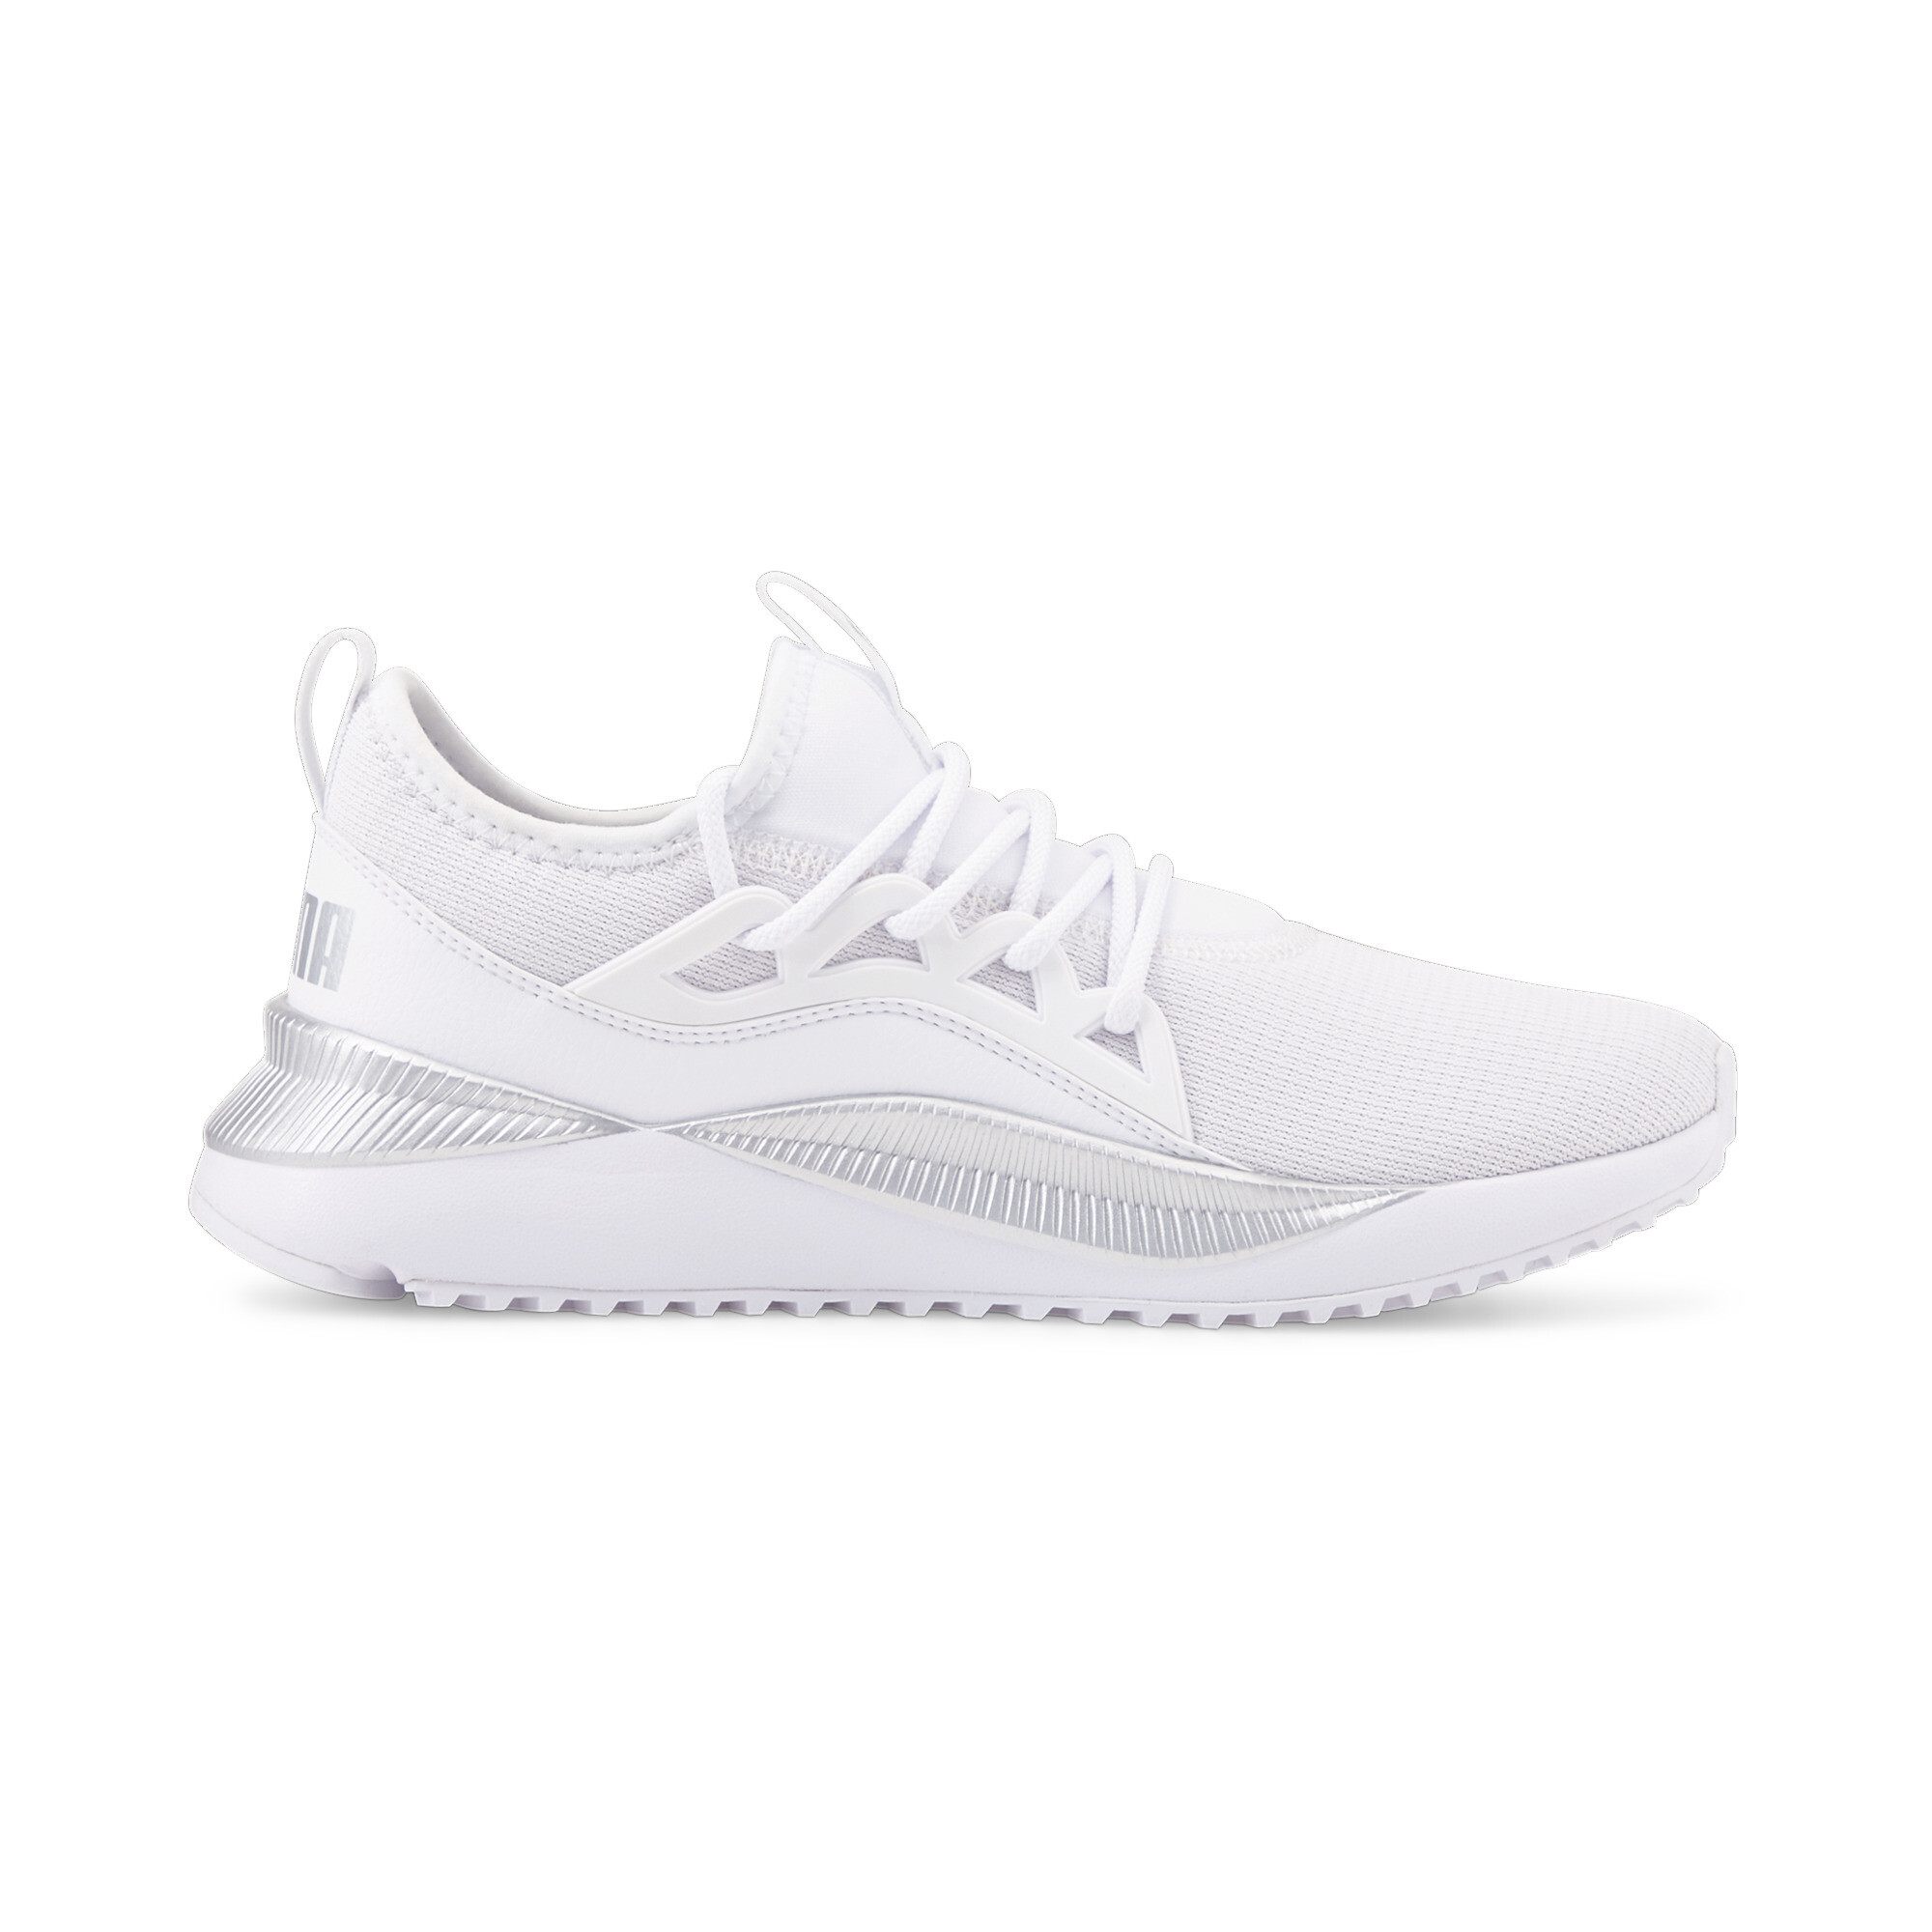 Women's PUMA Pacer Future Allure Trainers Shoes In White/Silver, Size EU 42